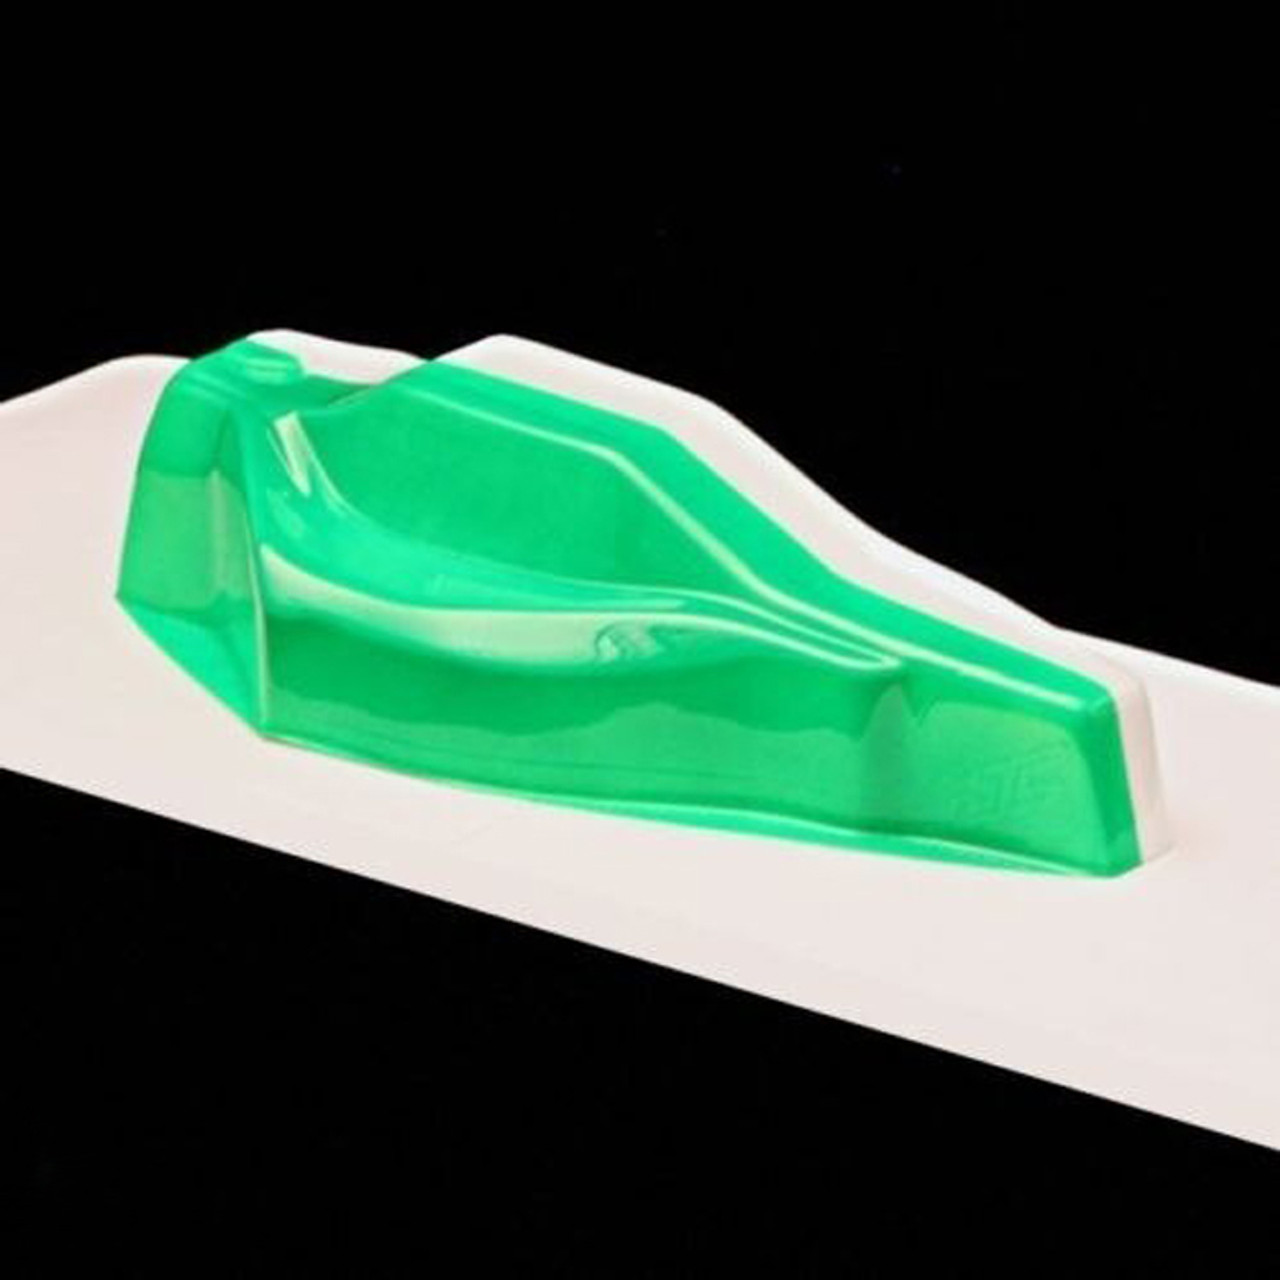 Spaz Stix - Green Fluorescent Aerosol Paint, 3.5oz Can